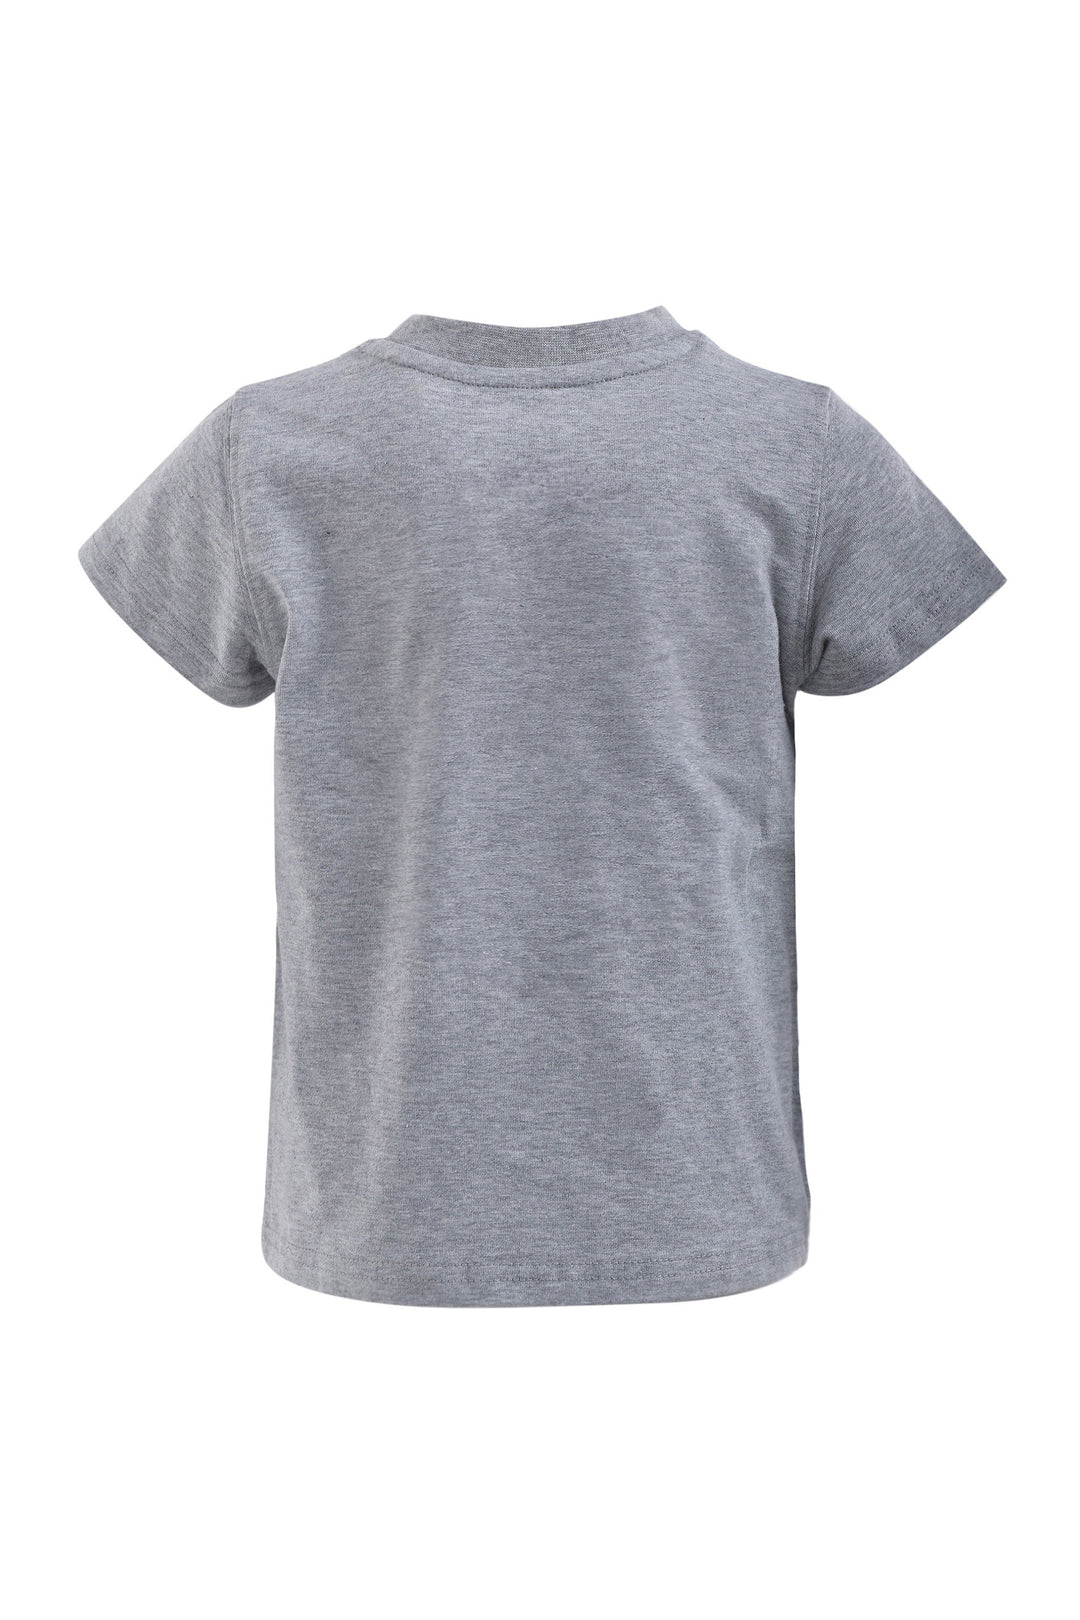 Cotton Short Sleeve Shirt [Junior]